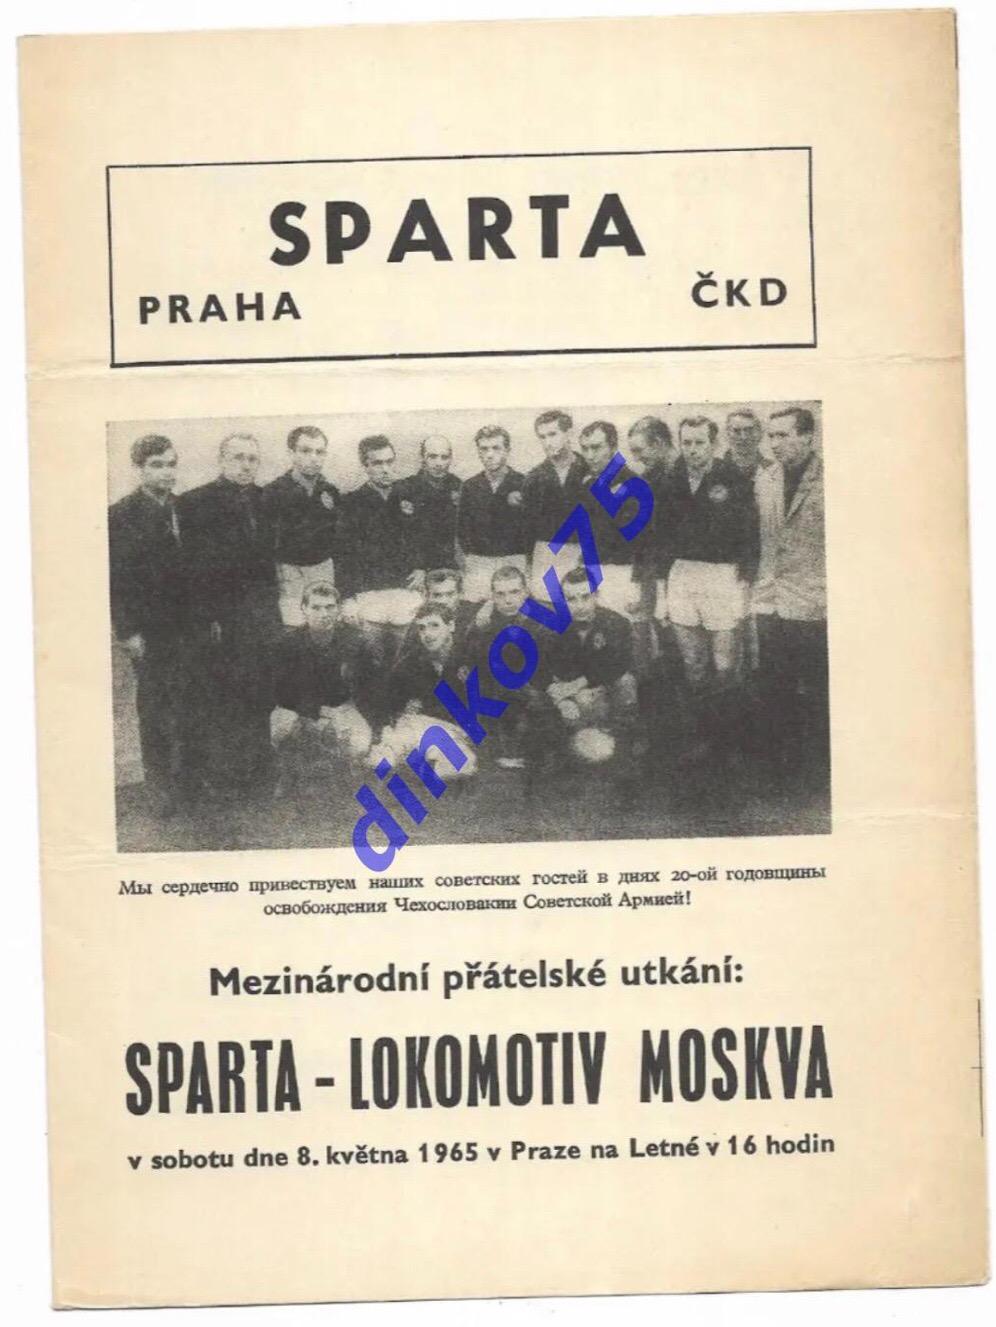 Программа Спарта Прага Чехословакия - Локомотив Москва 1965